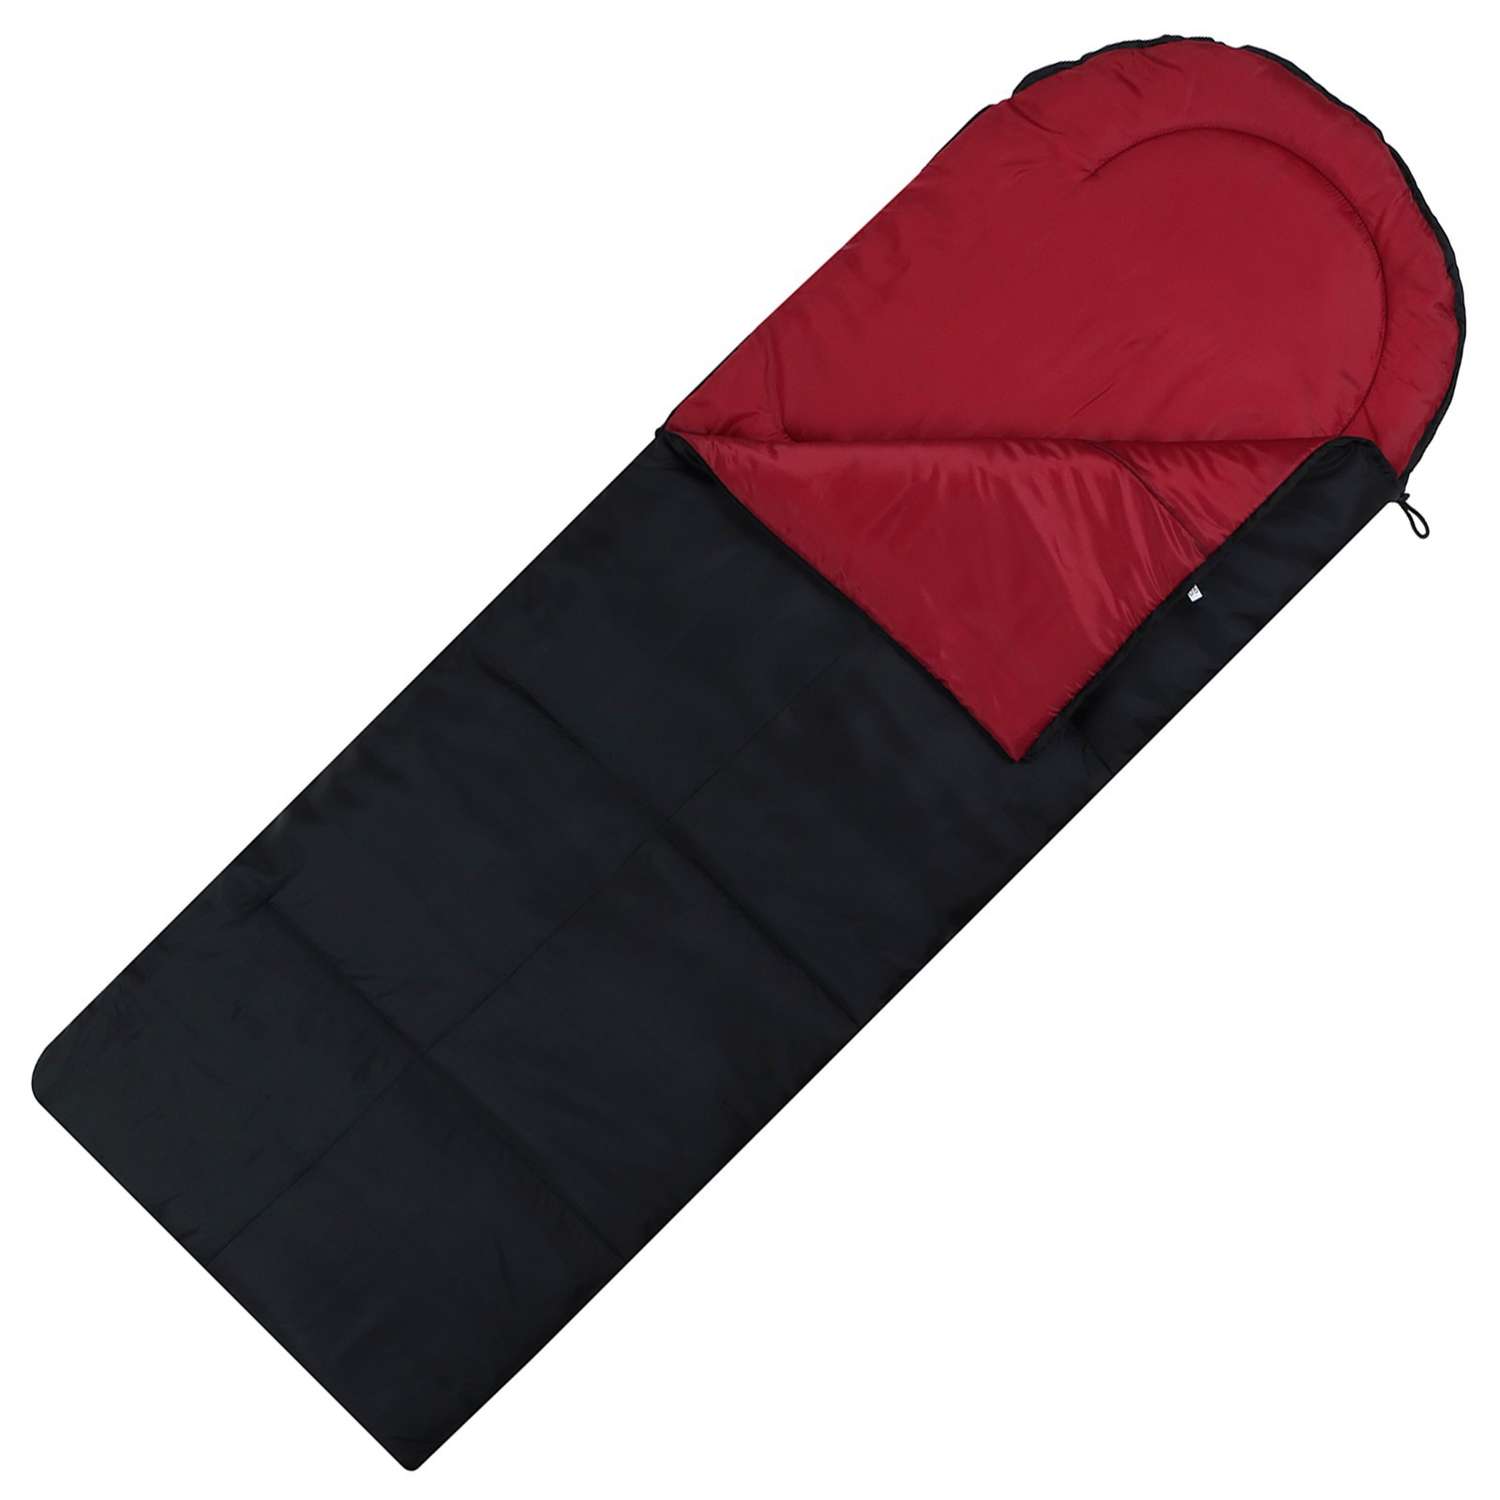 Спальник-одеяло Maclay с подголовником 235х80 см до -15°С - фото 8